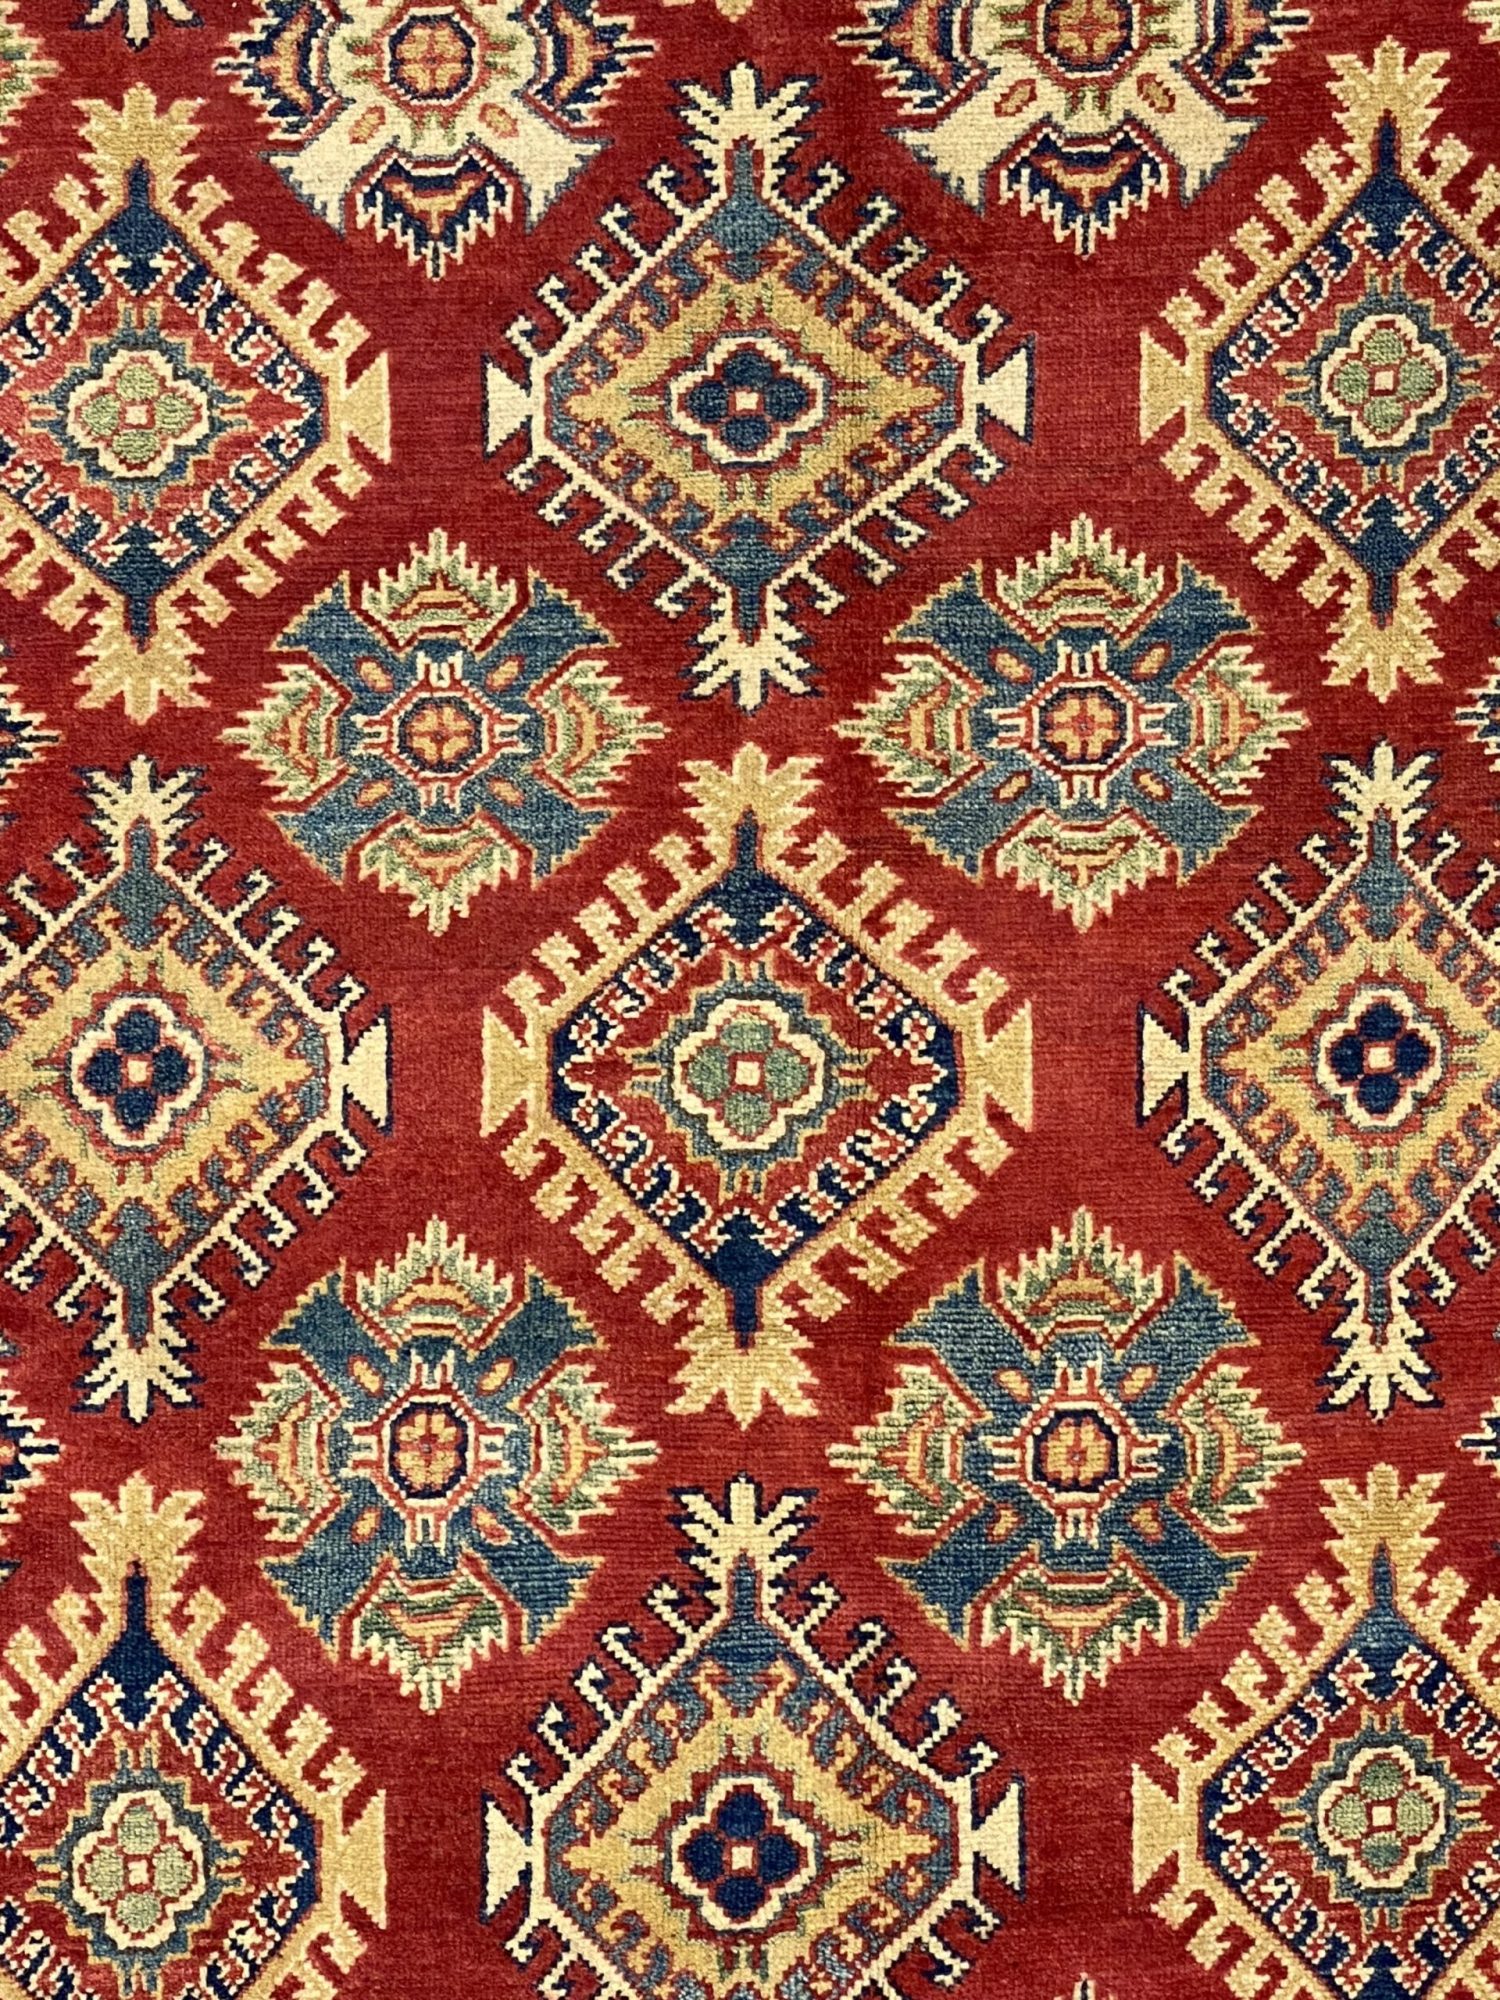 Kazak 8' 6" x 12' 7" Handmade Area Rug